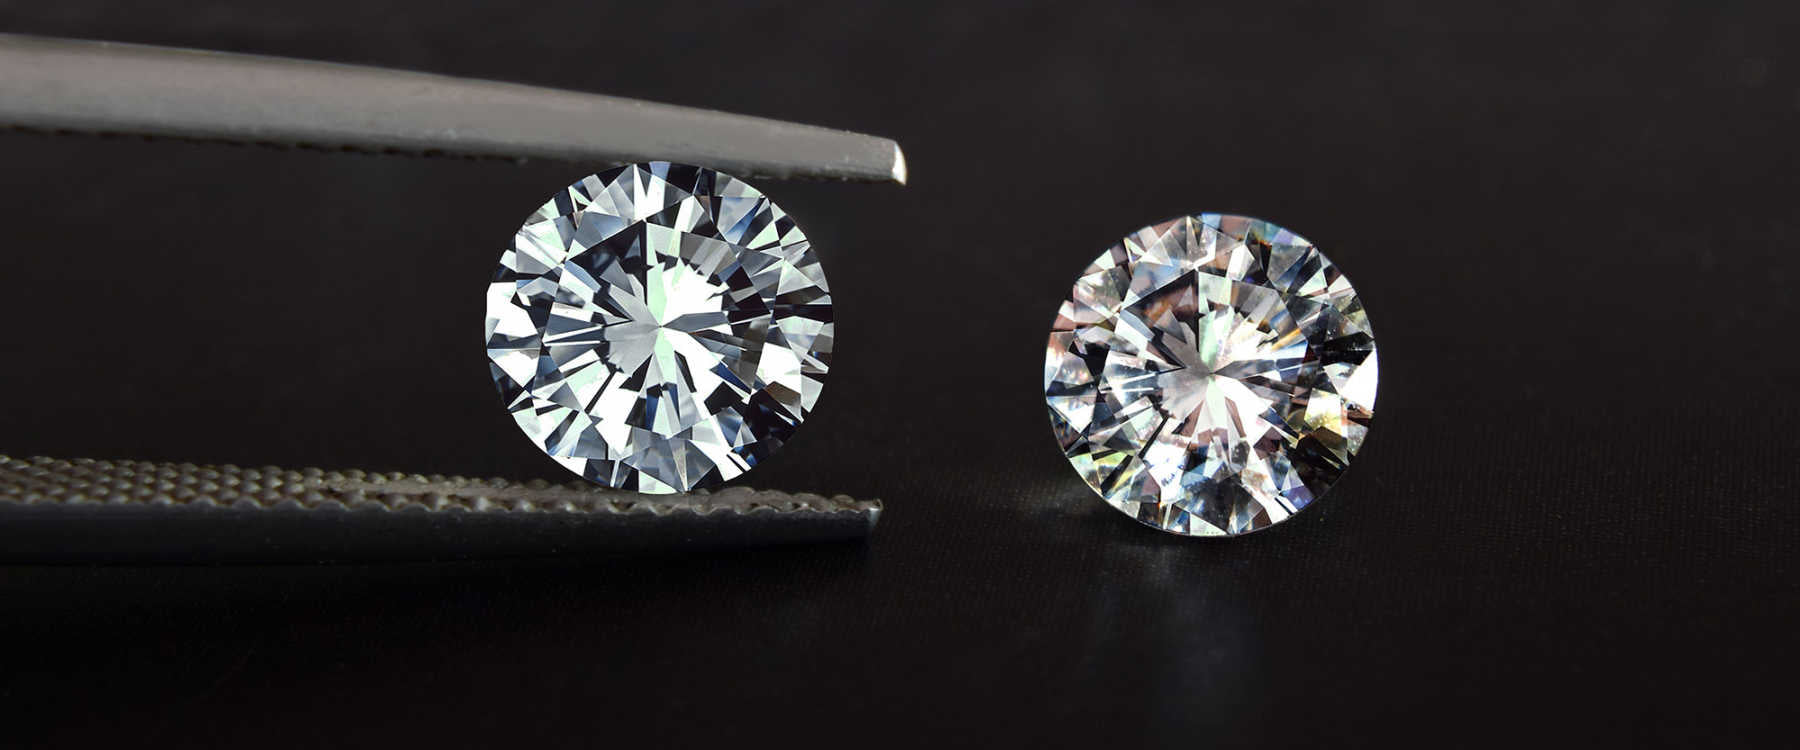 Two Loose Round Brilliant Diamonds